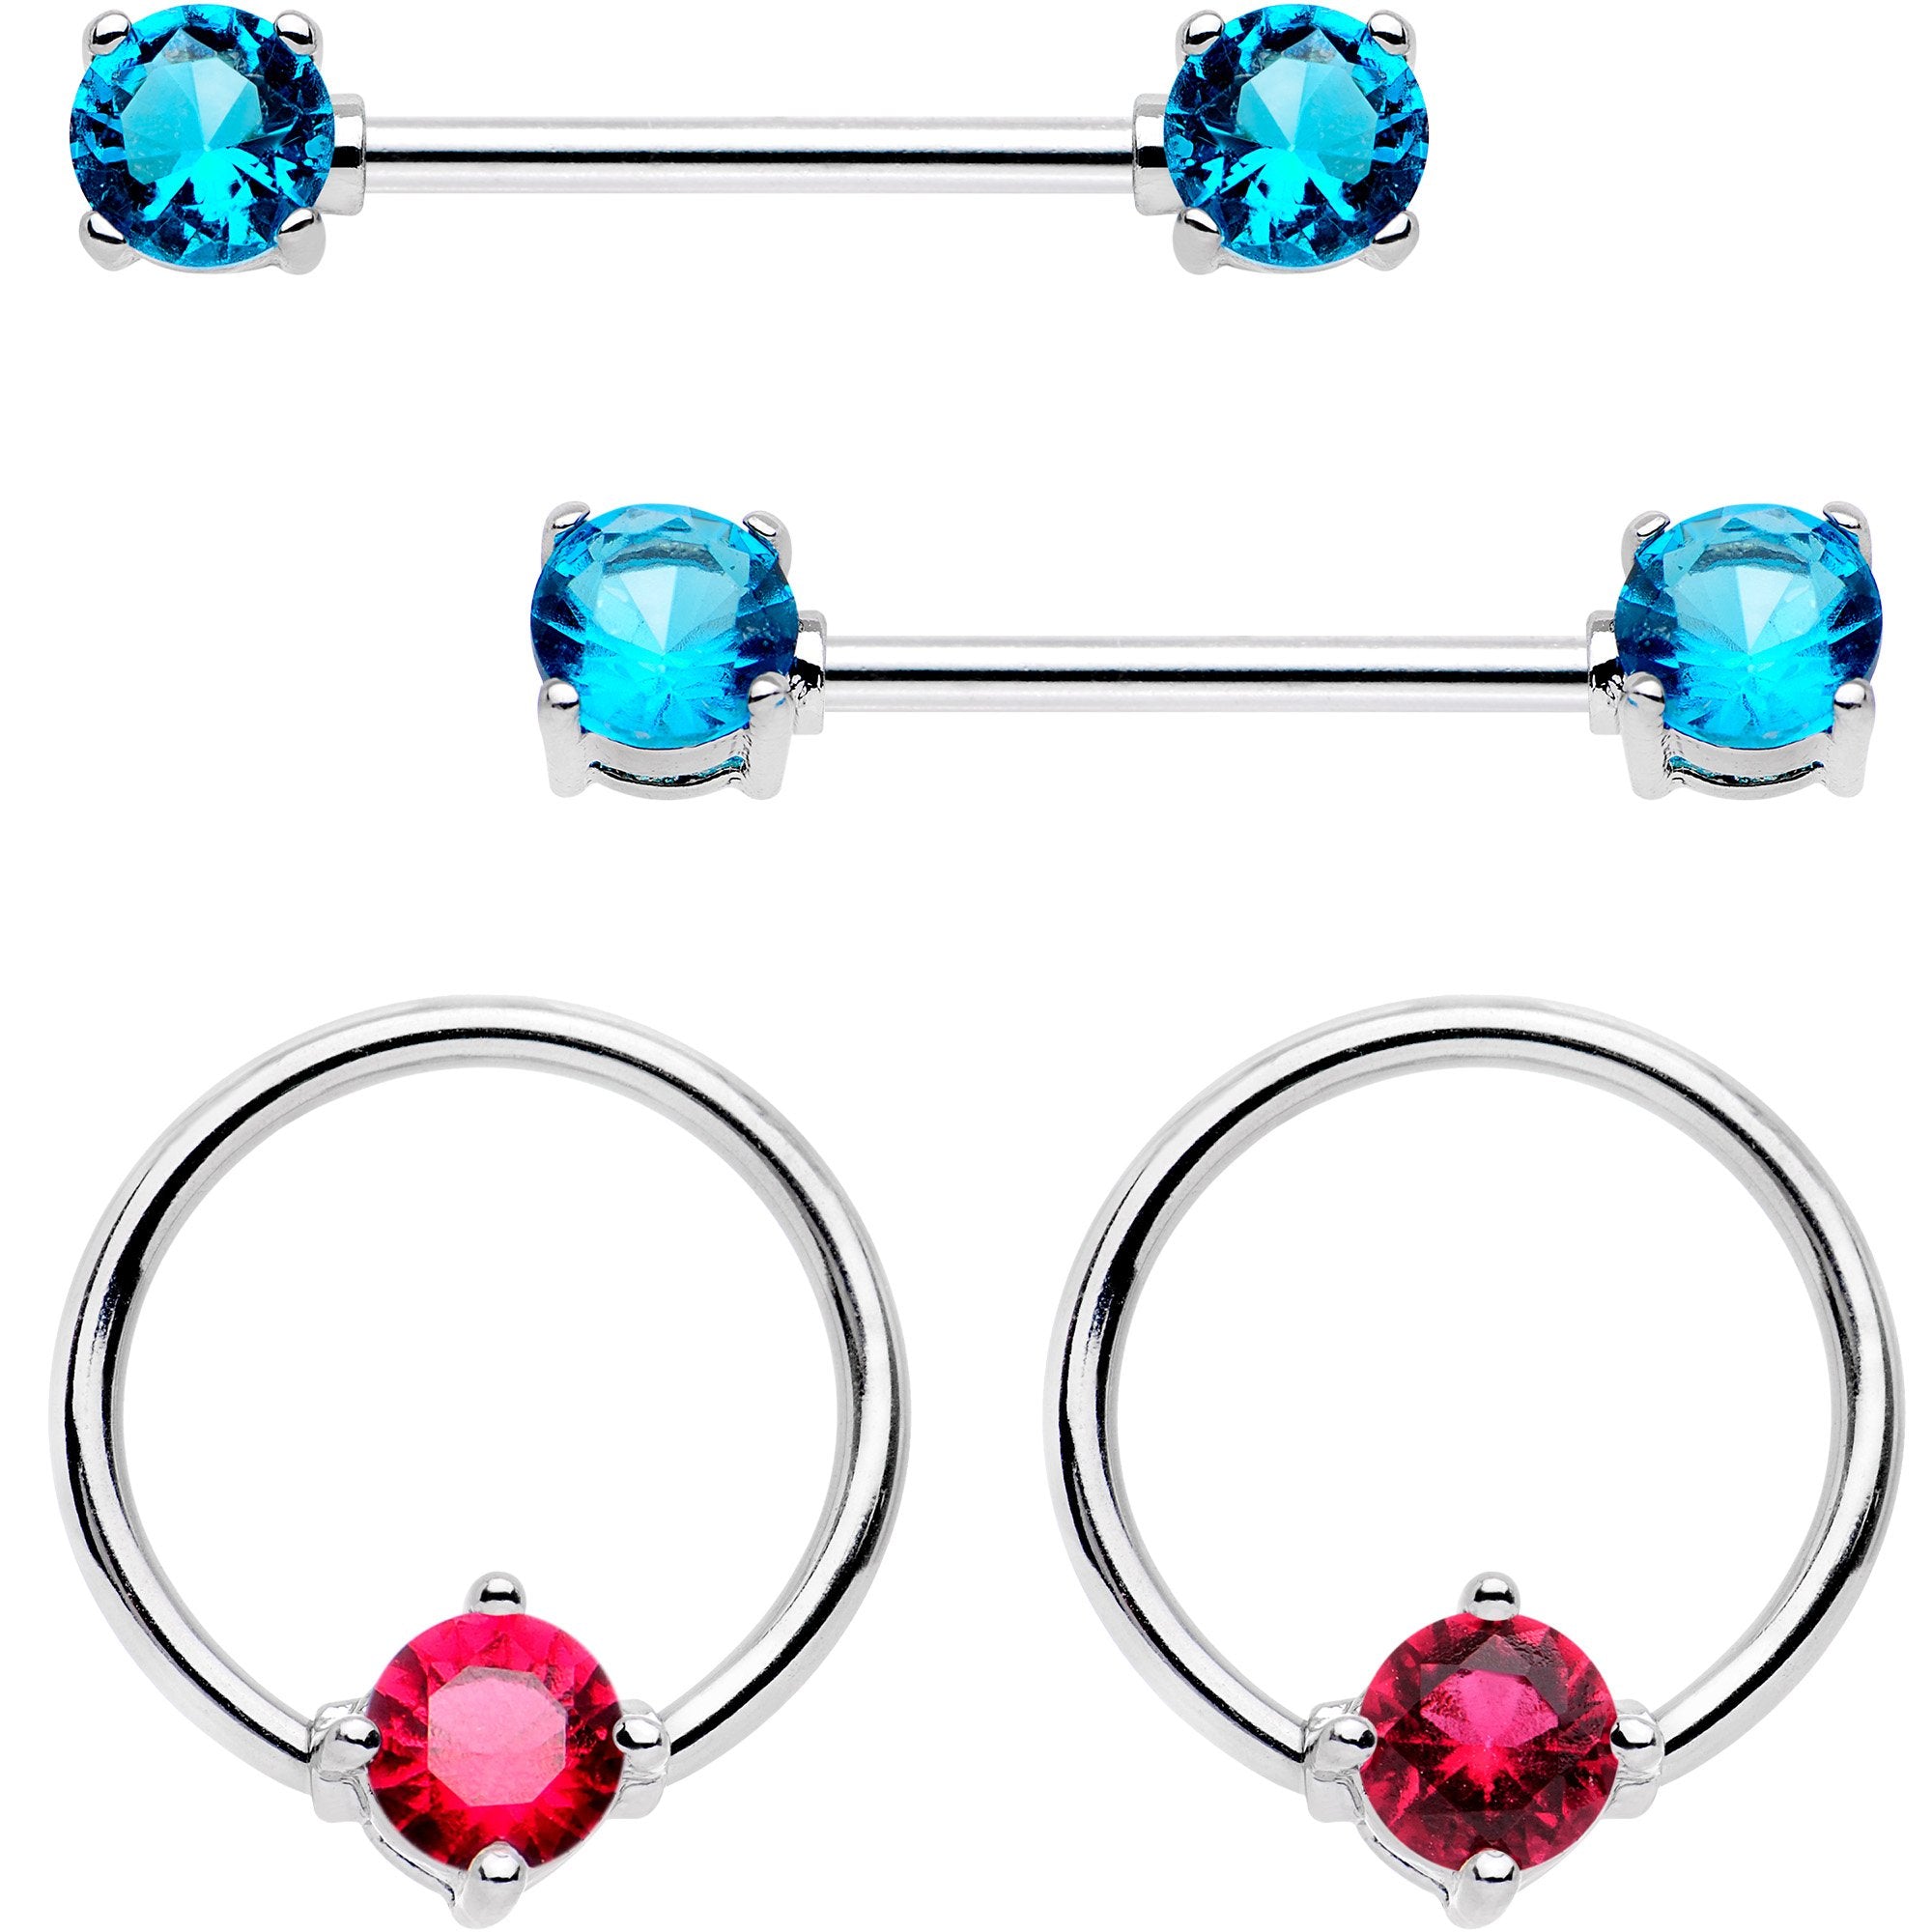 5/8 Pink Aqua Gem Captive Ring Straight Barbell Nipple Ring Set